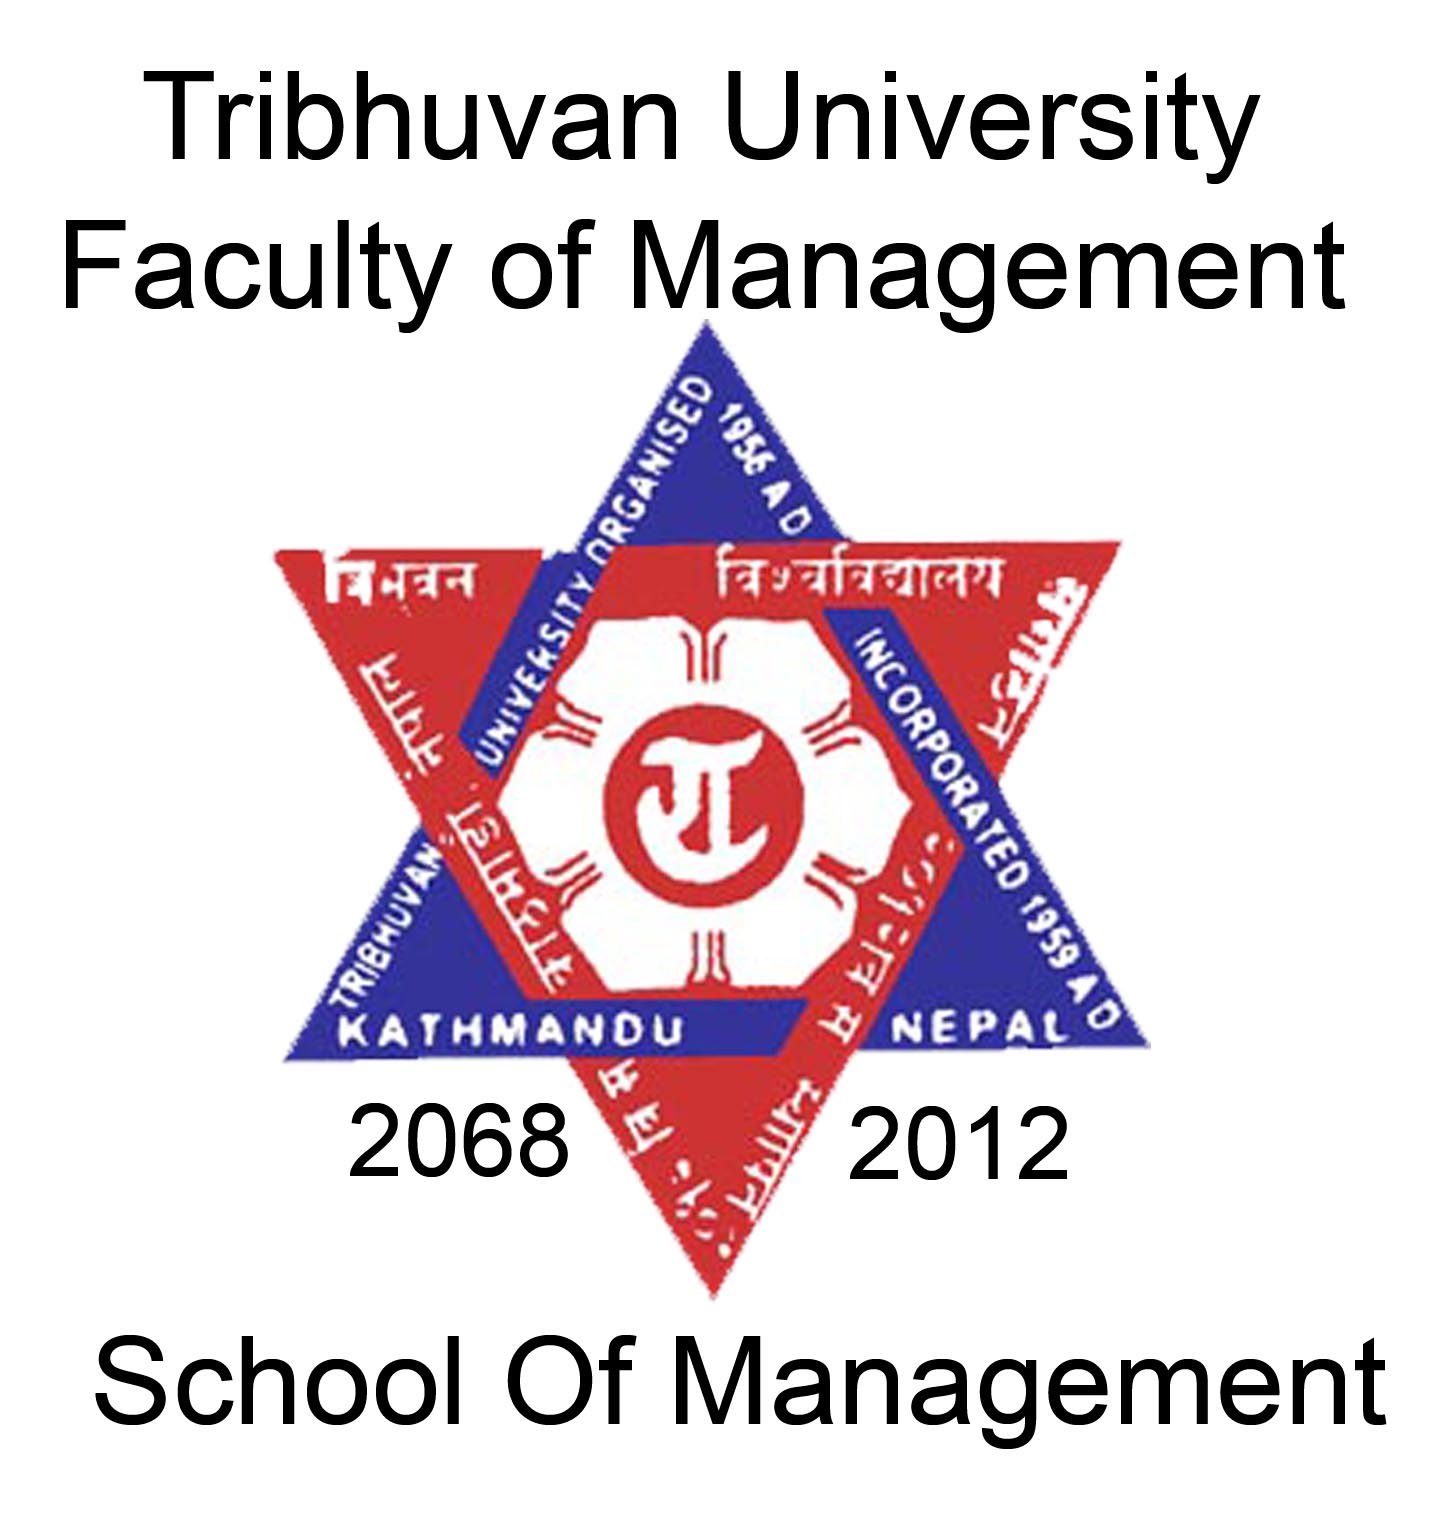 Tribhuvan University Faculty of Management logo